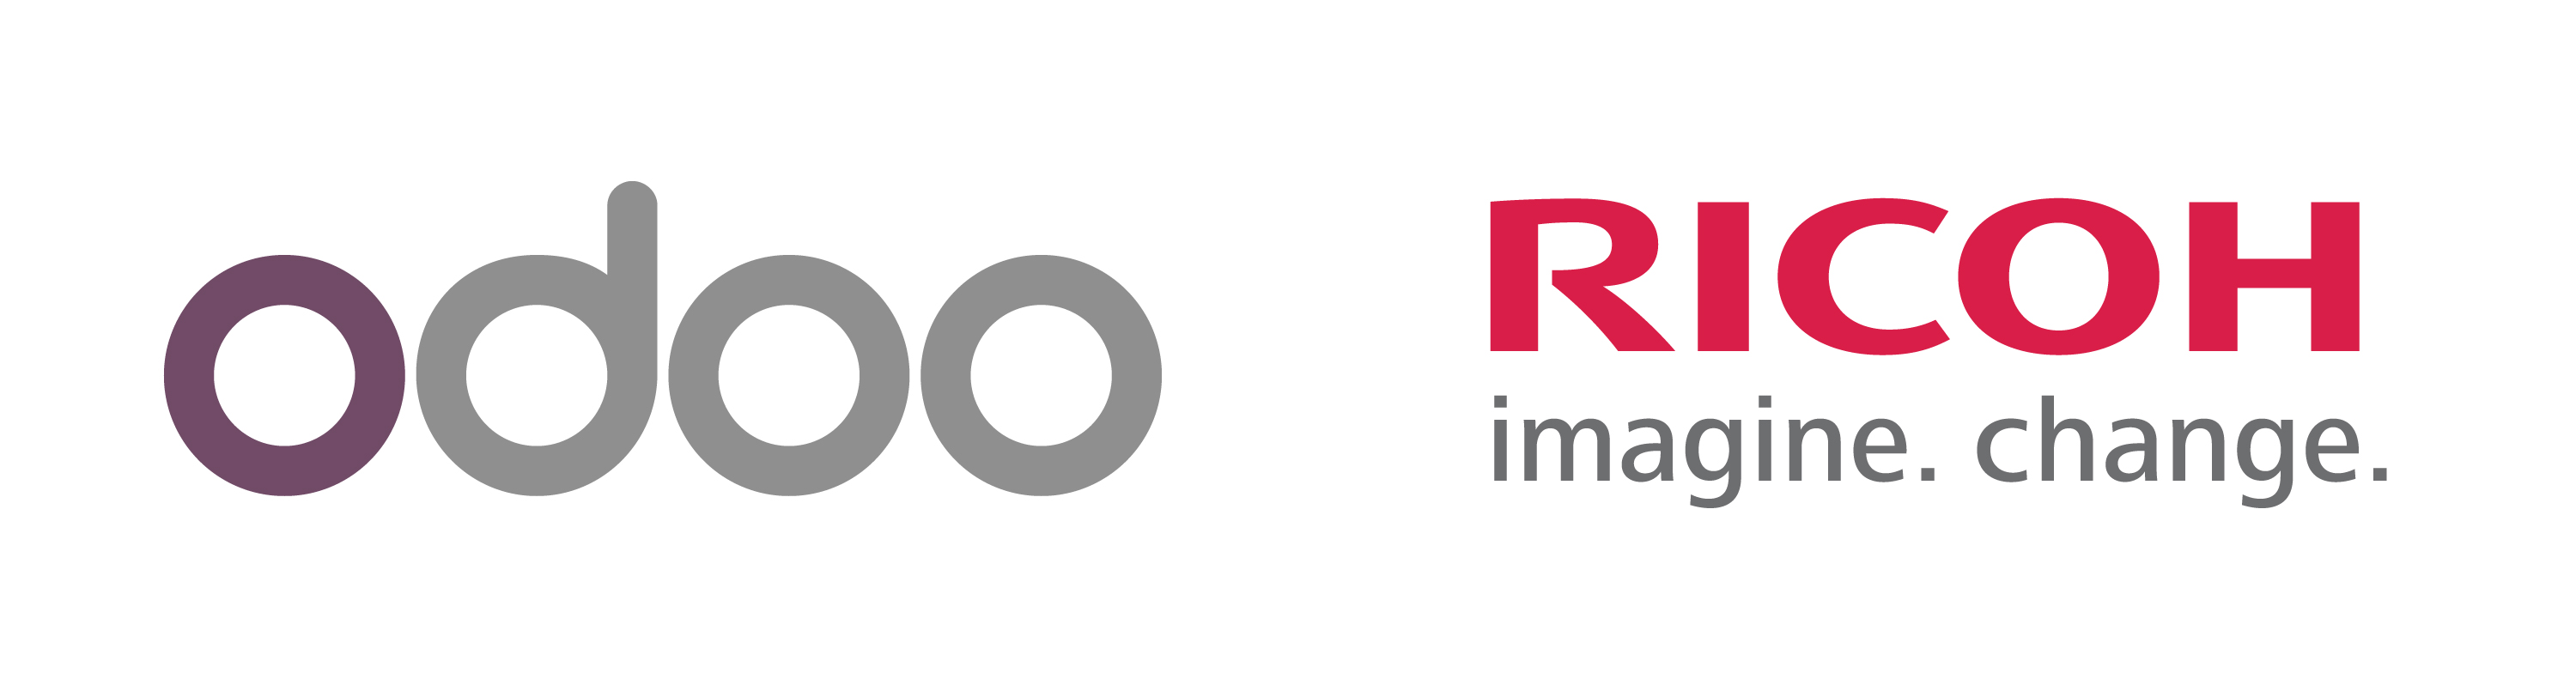 Odoo And Ricoh Announce Strategic Partnership